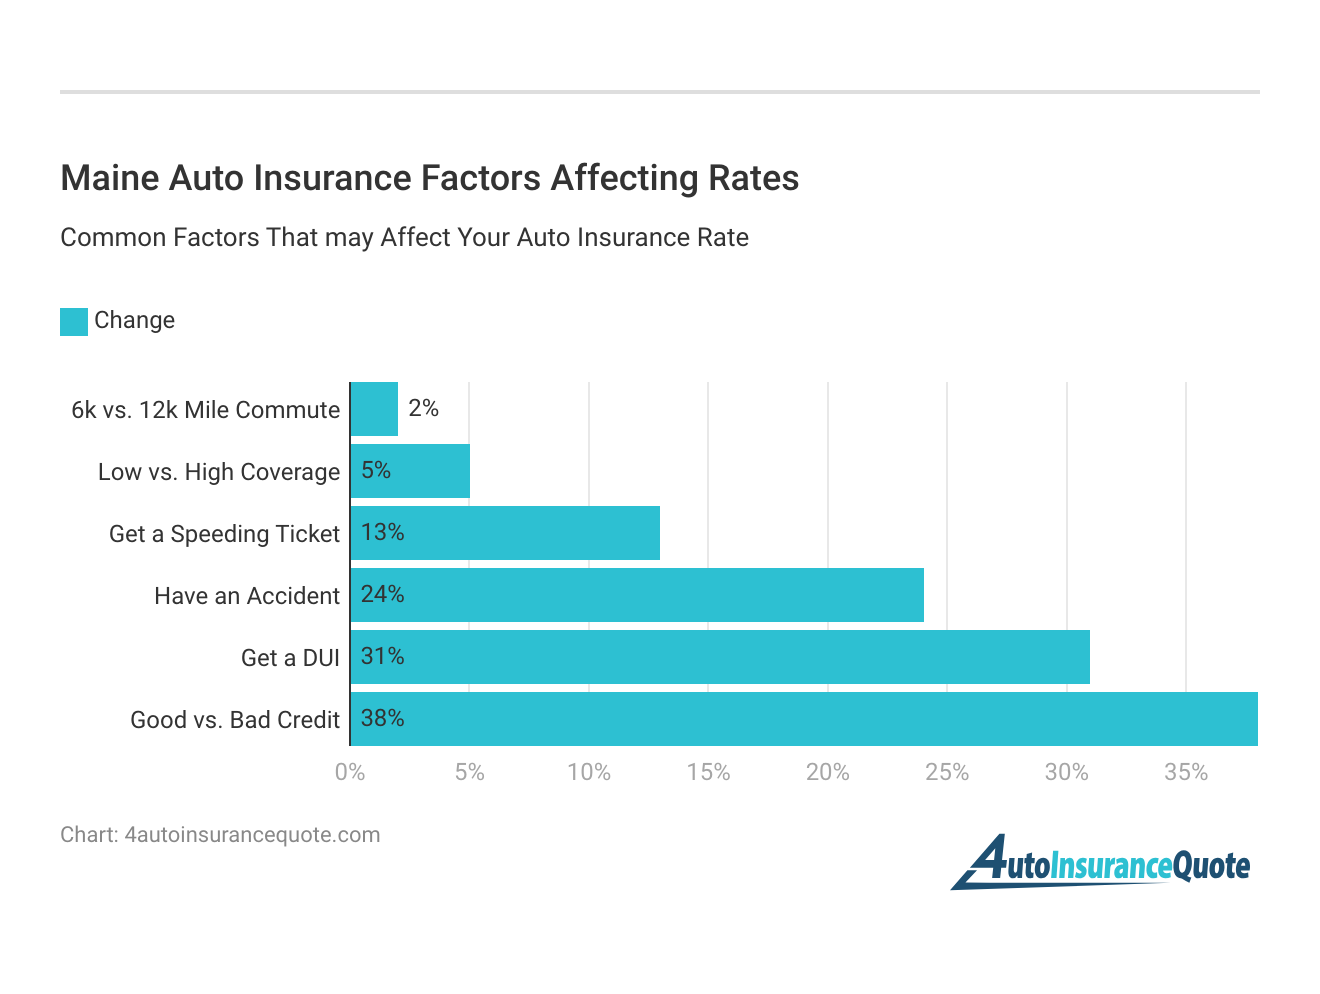 <h3>Maine Auto Insurance Factors Affecting Rates</h3>